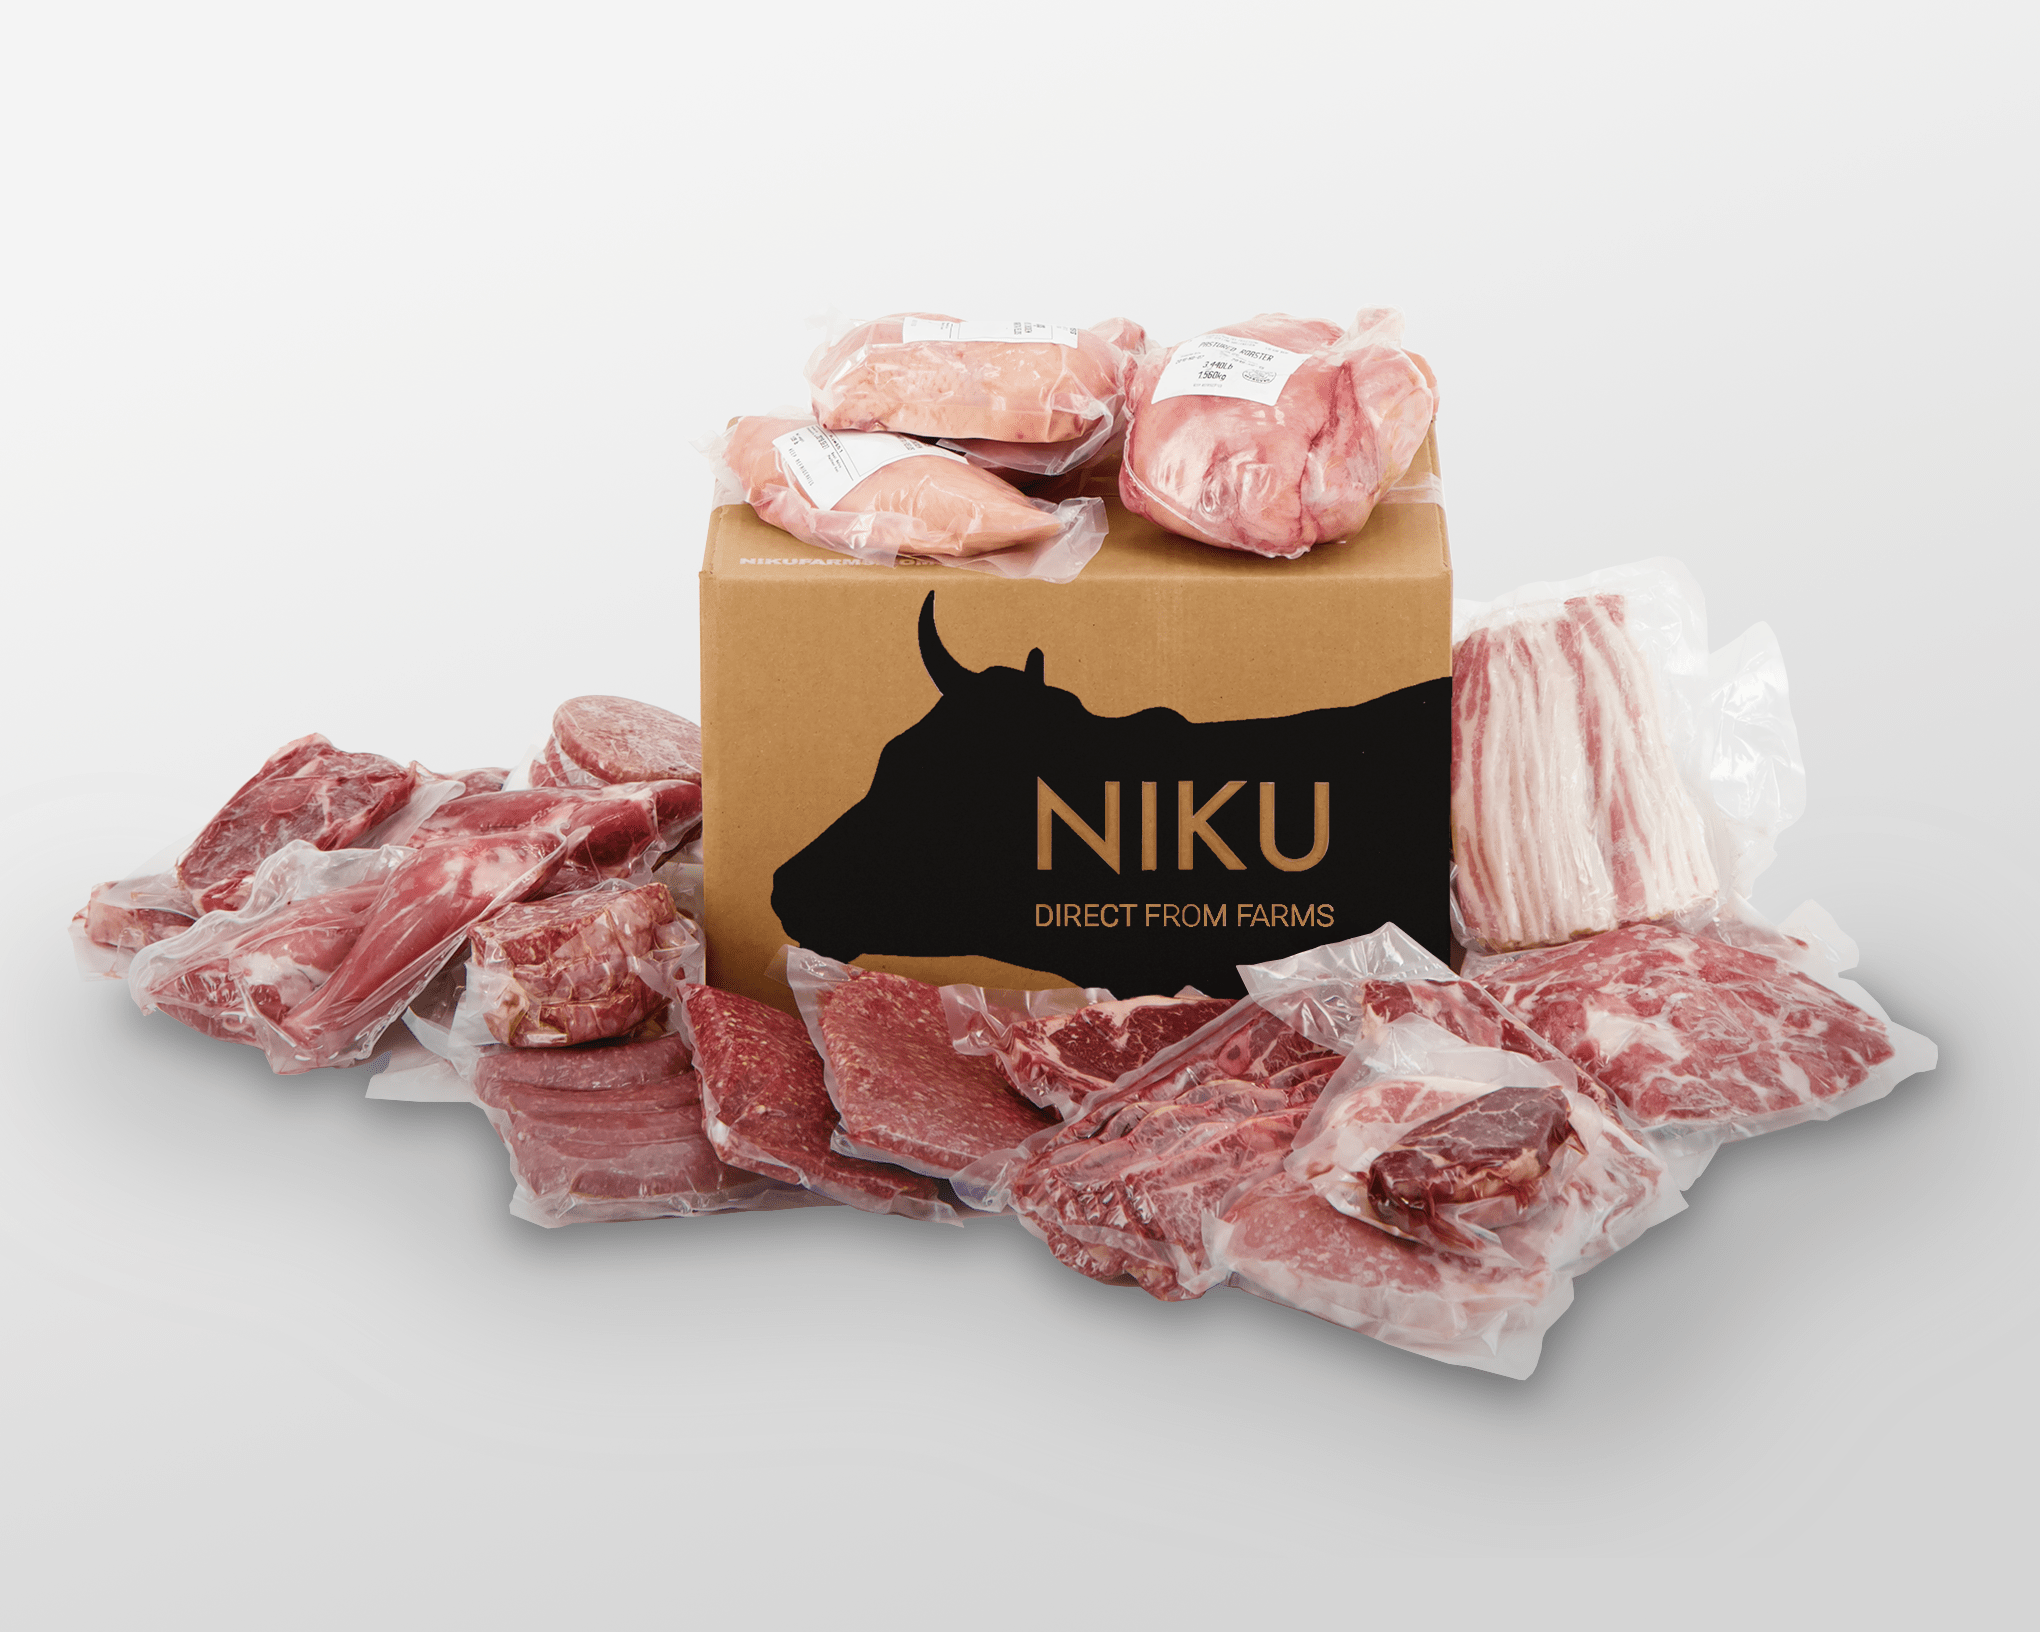 Niku Farms' large box sample